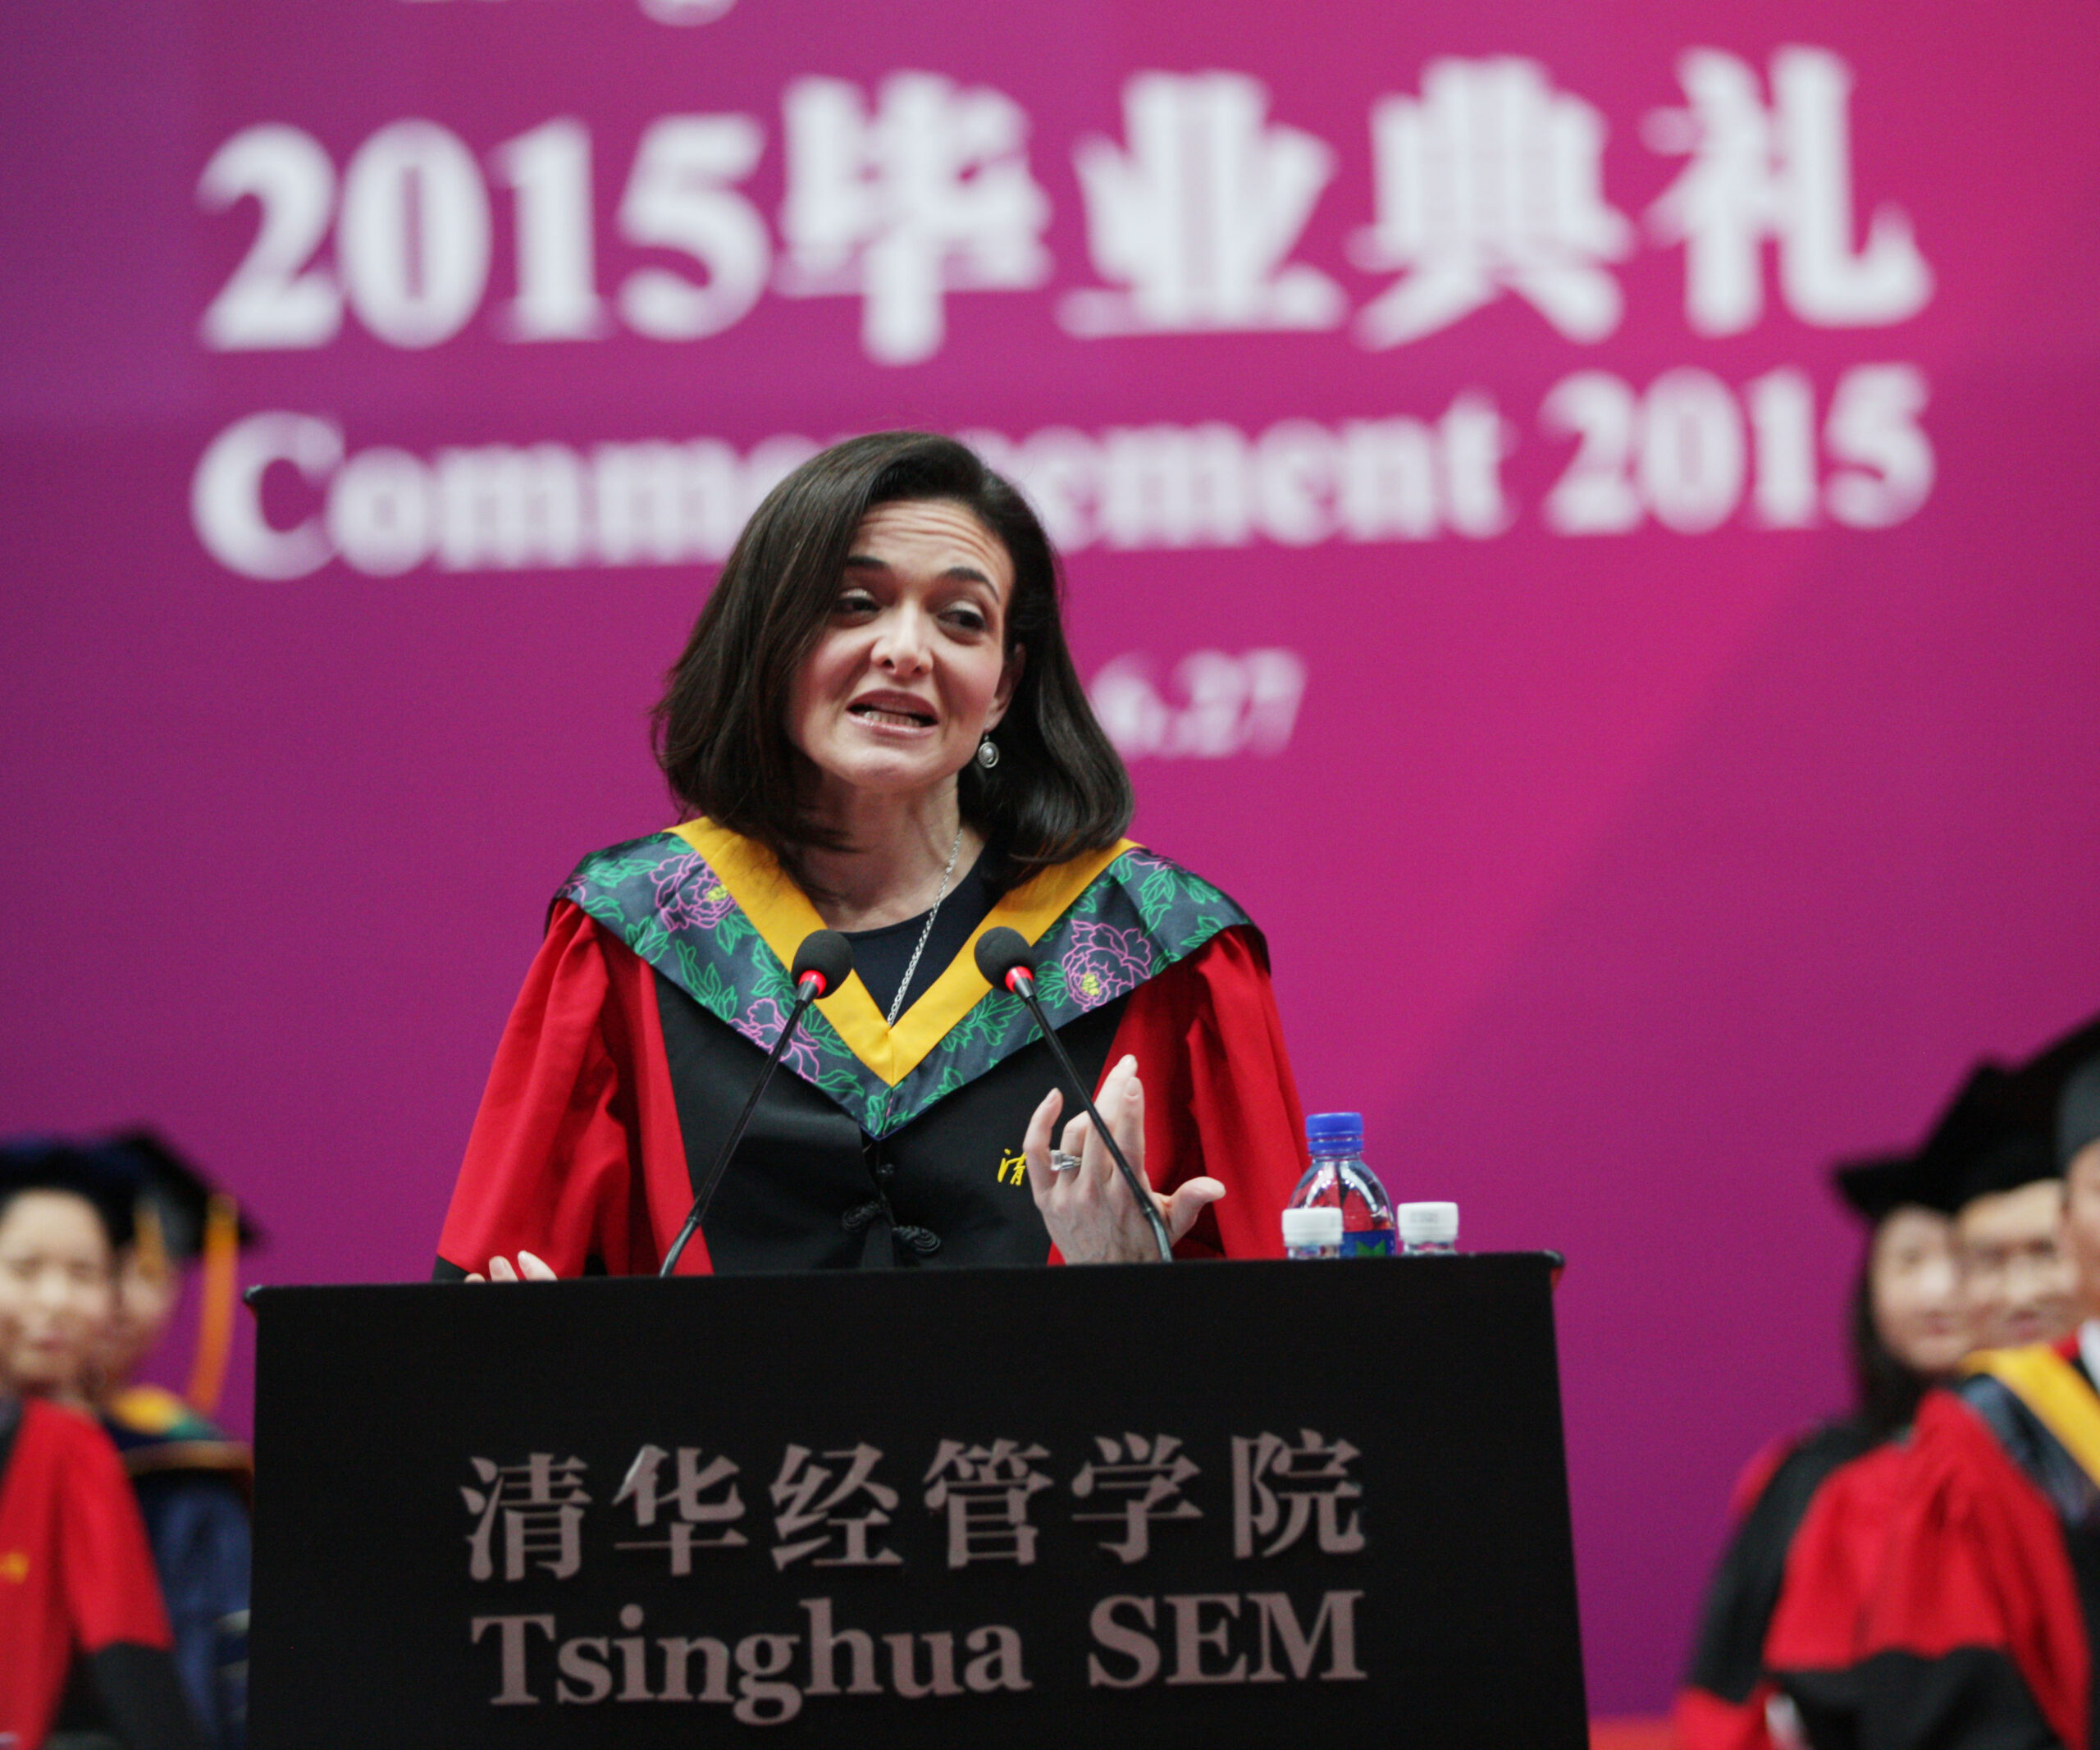 Sheryl Sandberg speaking at Beijing University 